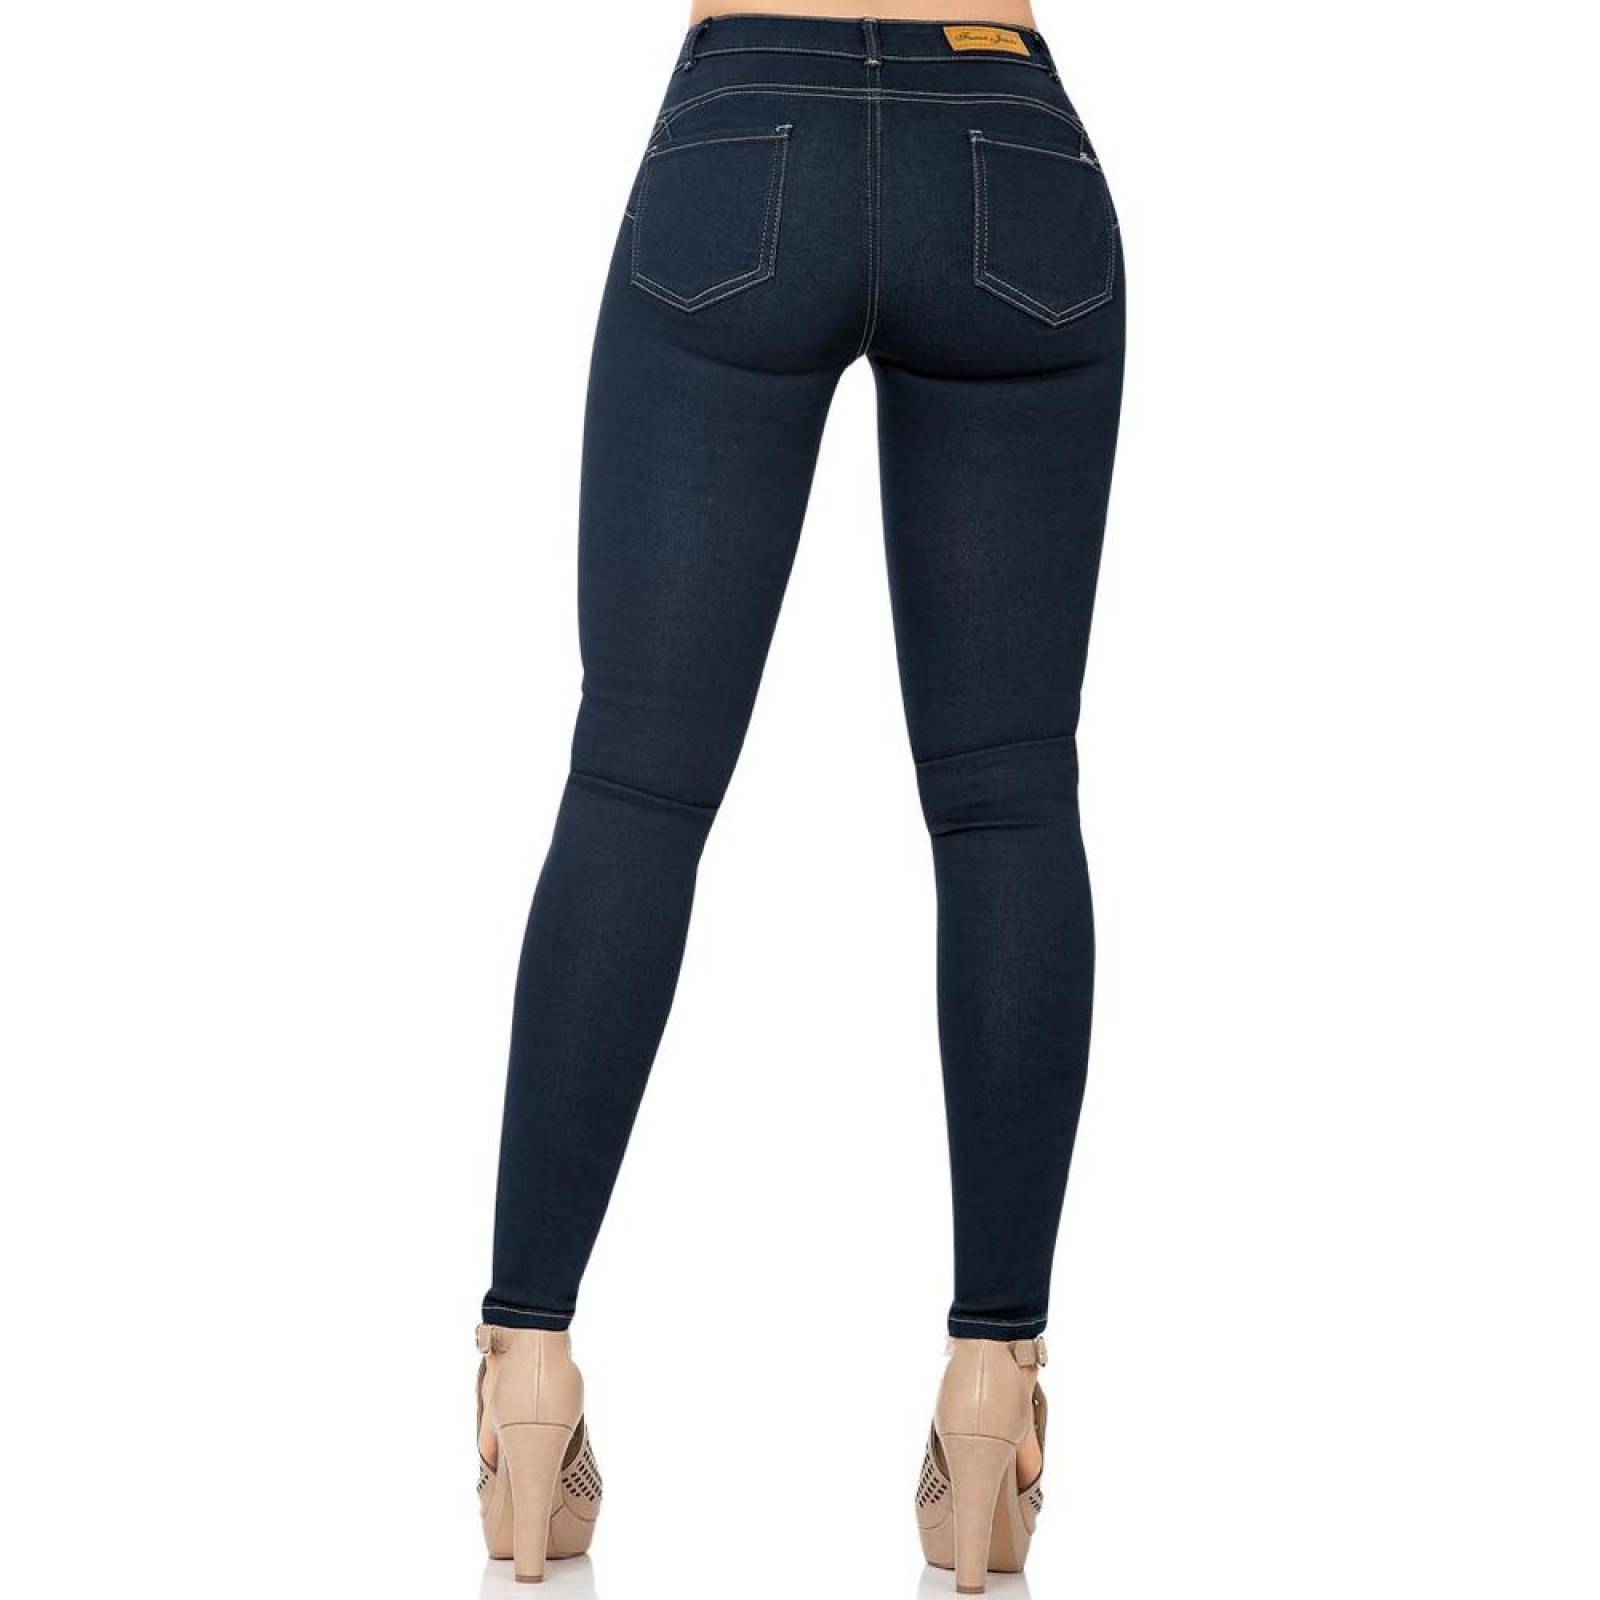 Jeans Básico Mujer Furor Indigo 62104011 Mezclilla Stretch 